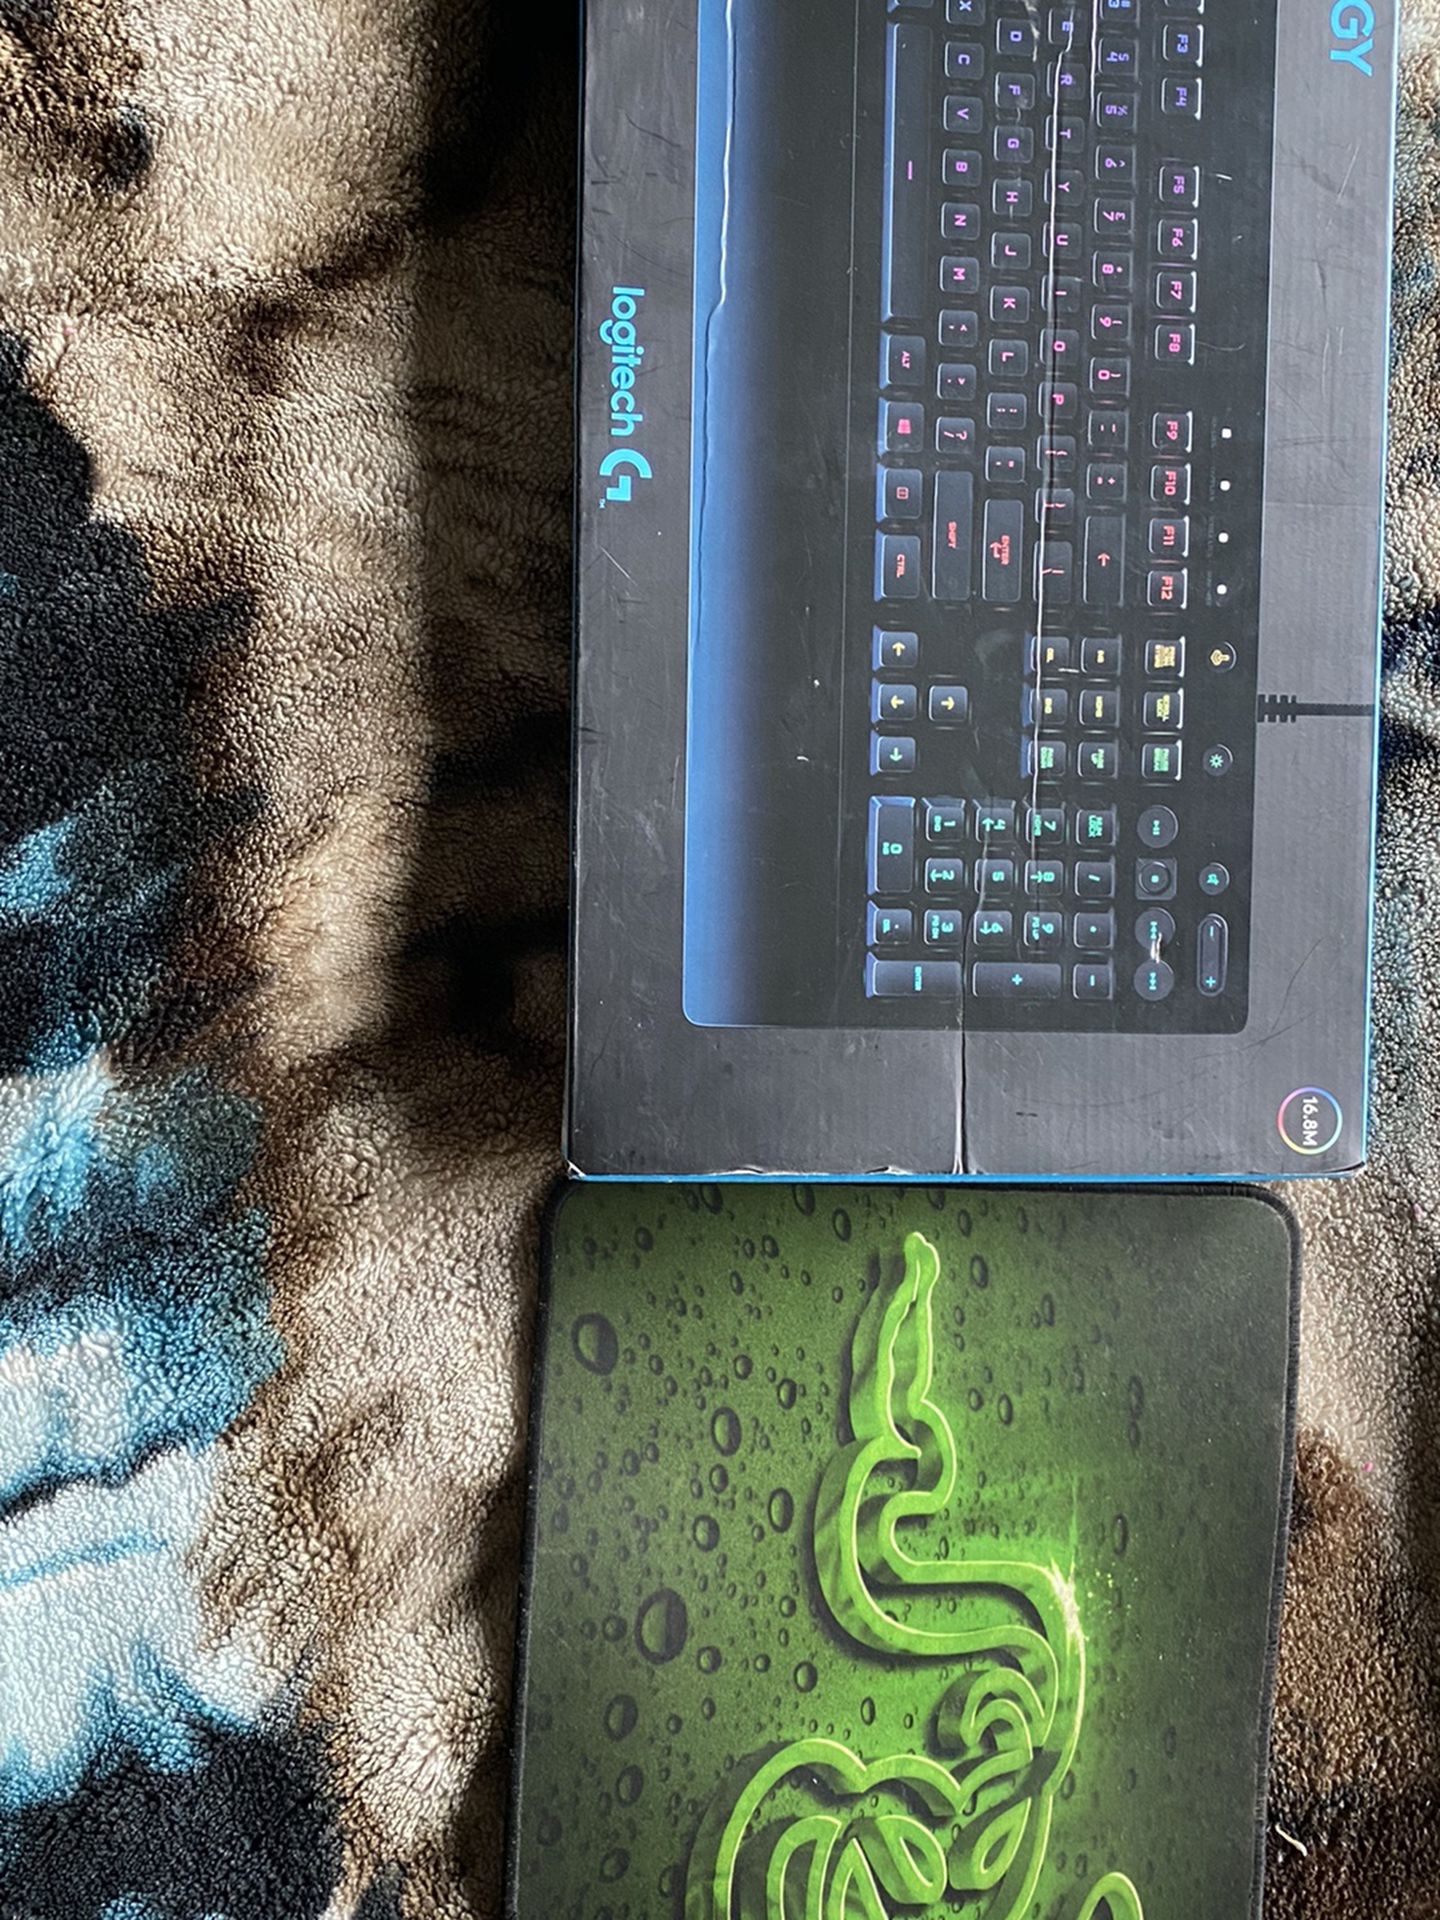 Logitech gaming keyboard and gaming mouse pad